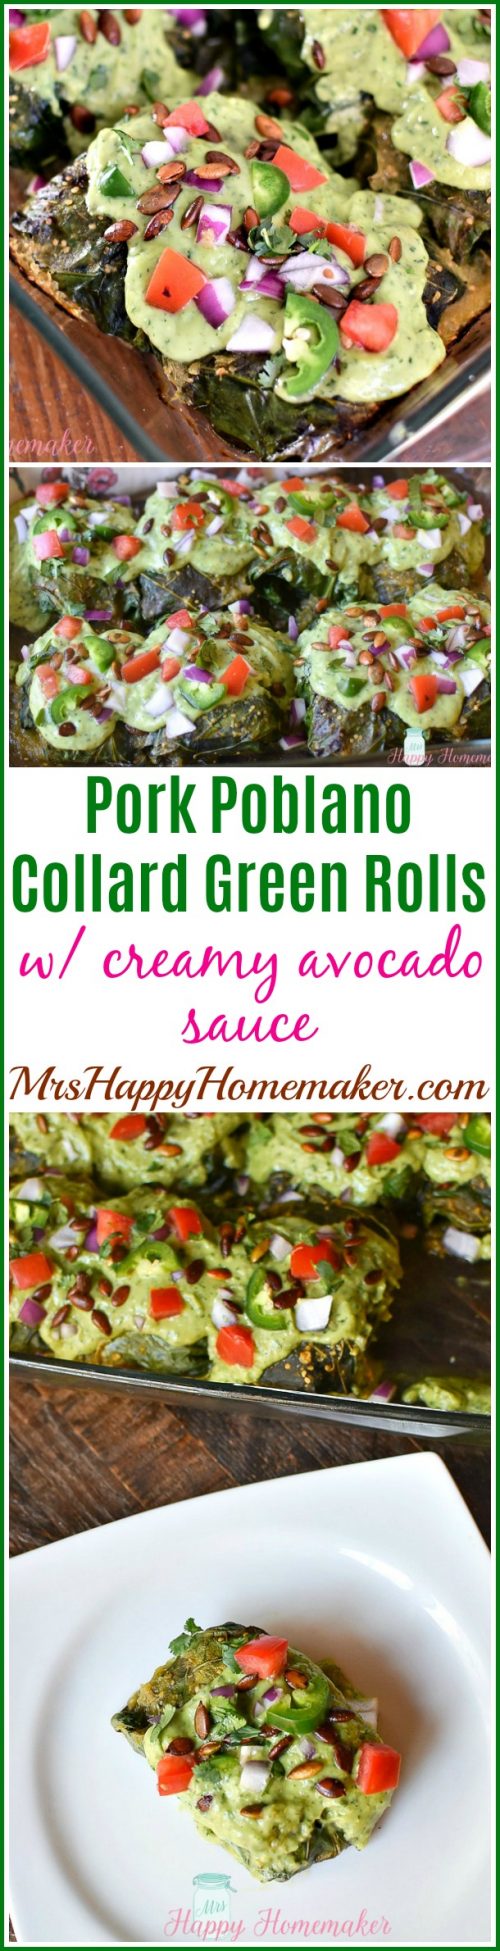 Pork Poblano Collard Green Rolls with Creamy Avocado Sauce - Whole30/Paleo Enchiladas | MrsHappyHomemaker.com